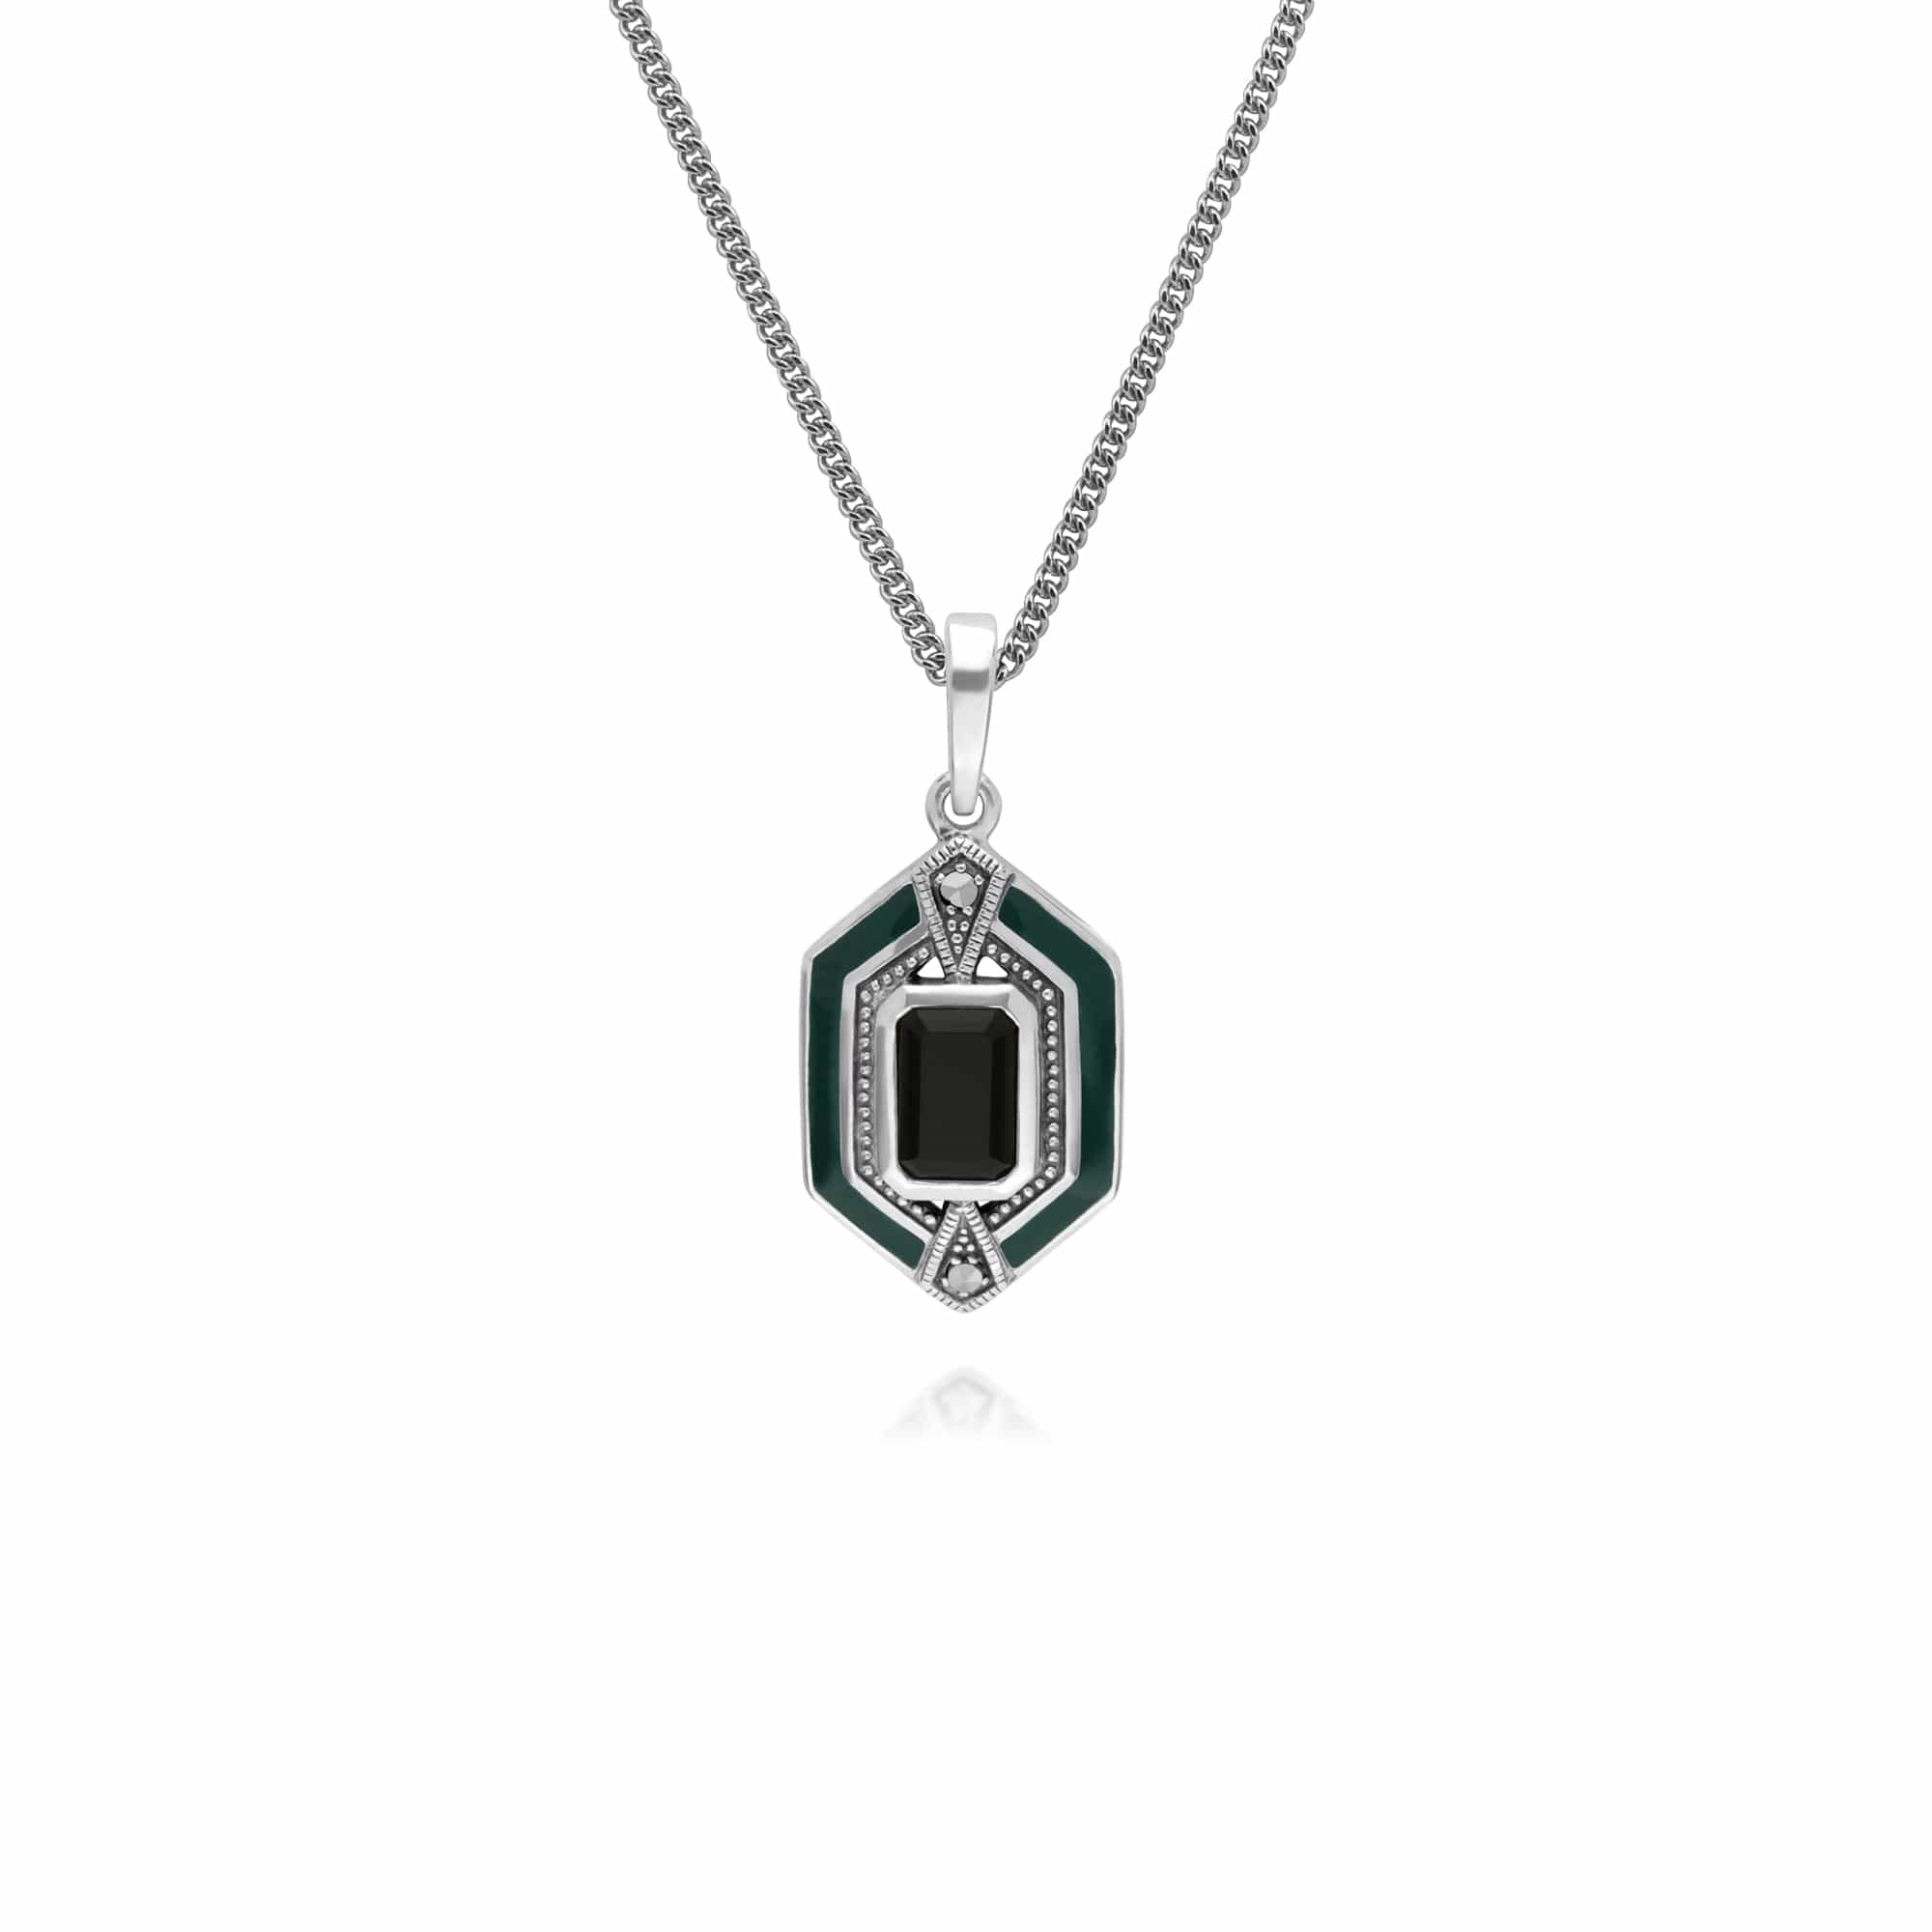 214P303401925-214R602604925 Art Deco Style Black Onyx, Marcasite & Green Enamel Hexagon Ring & Pendant Set in 925 Sterling Silver 2